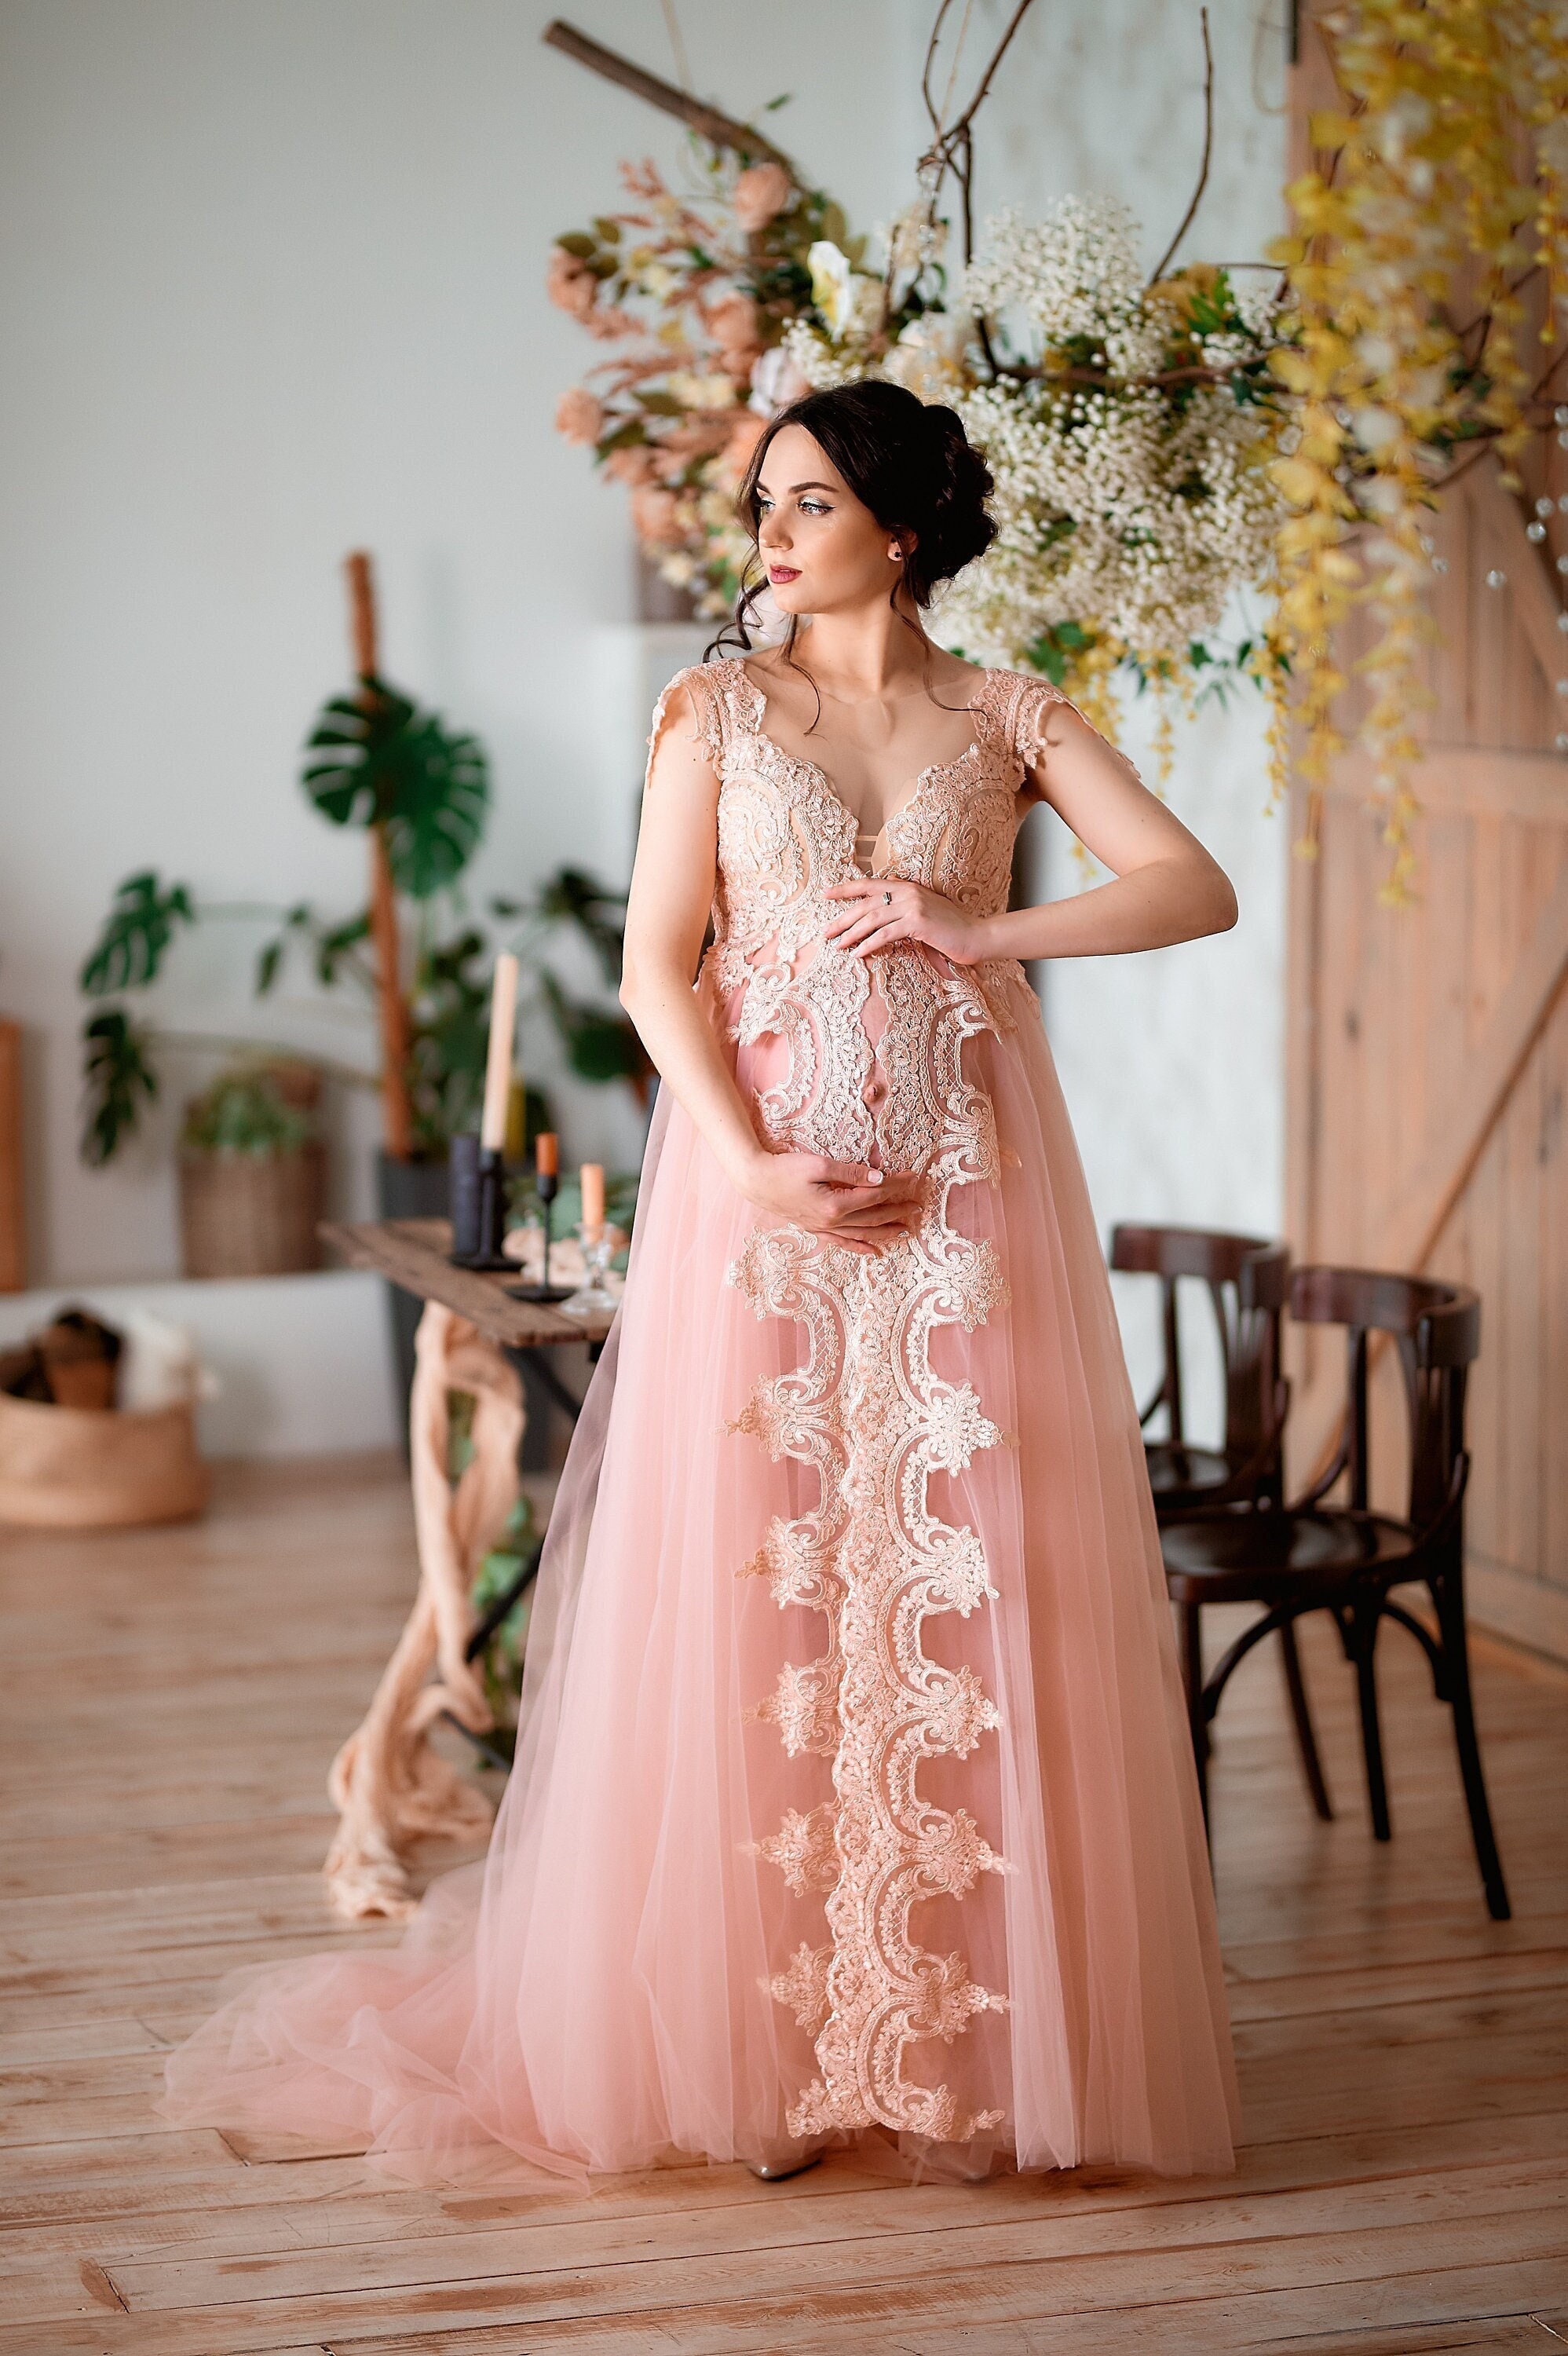 Curvy Blush Wedding Dress Fairy Pink Tulle Train & Lace#1162